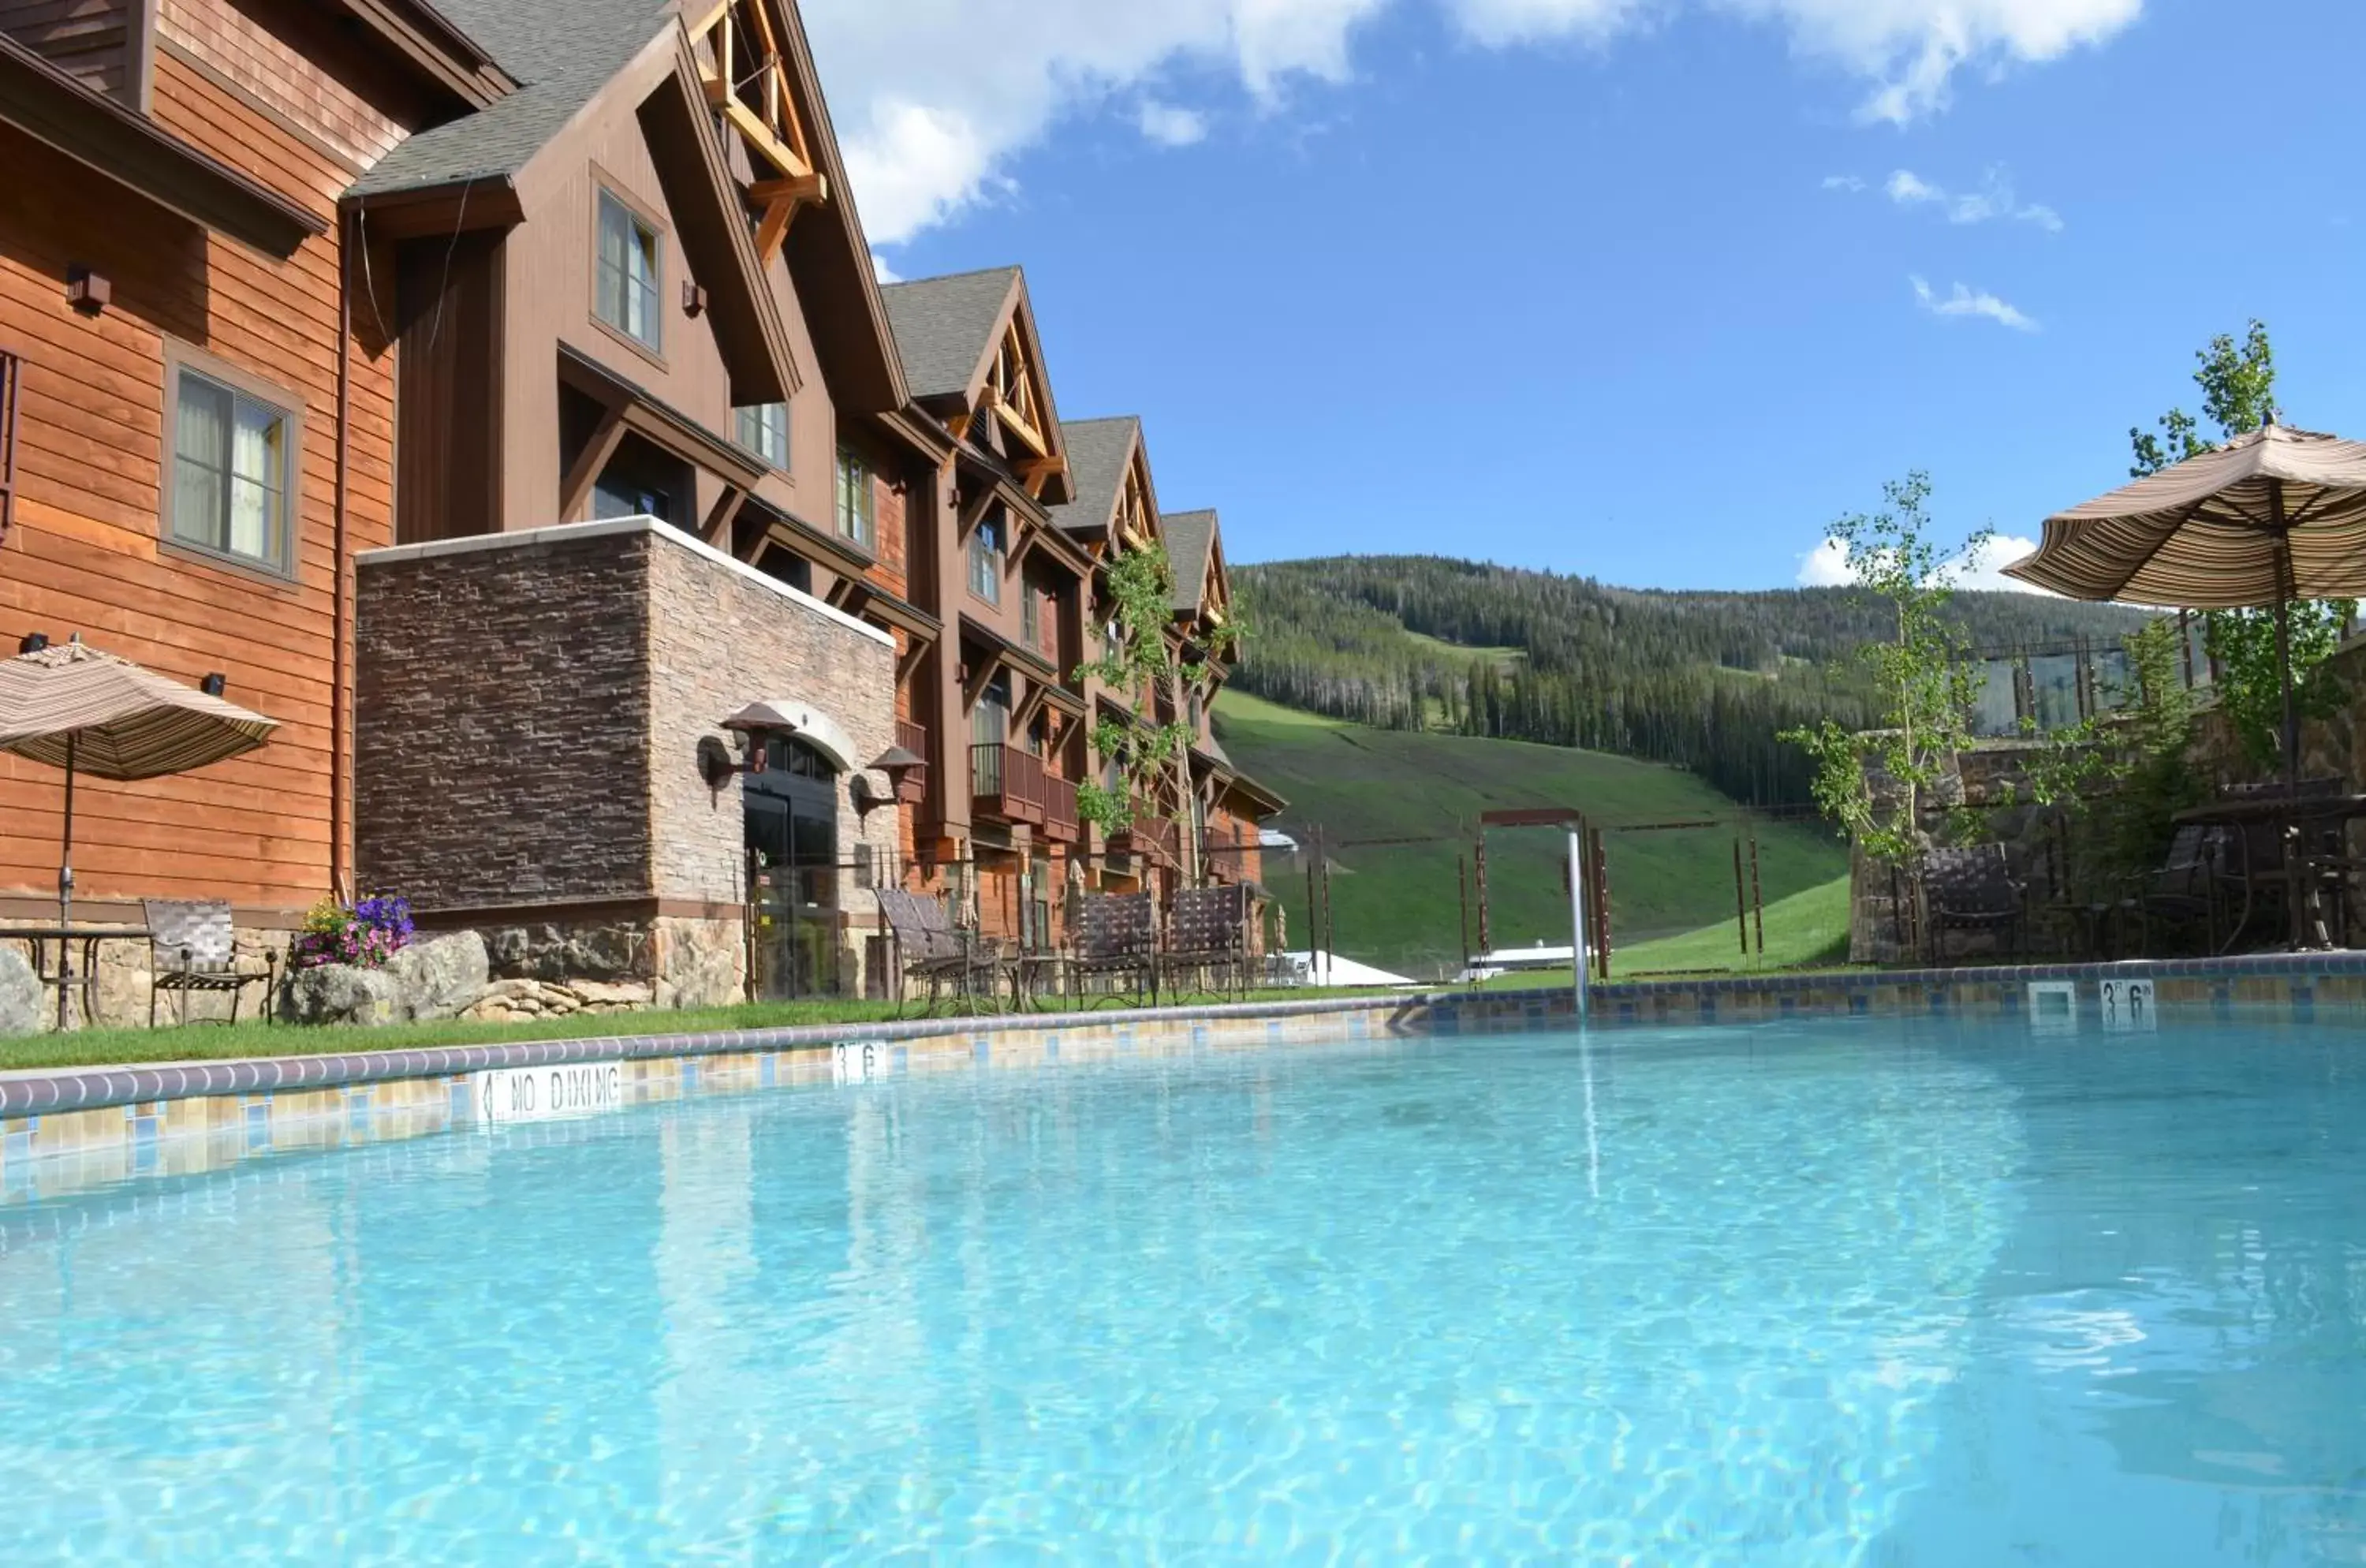 Swimming Pool in Big Sky Resort Village Center